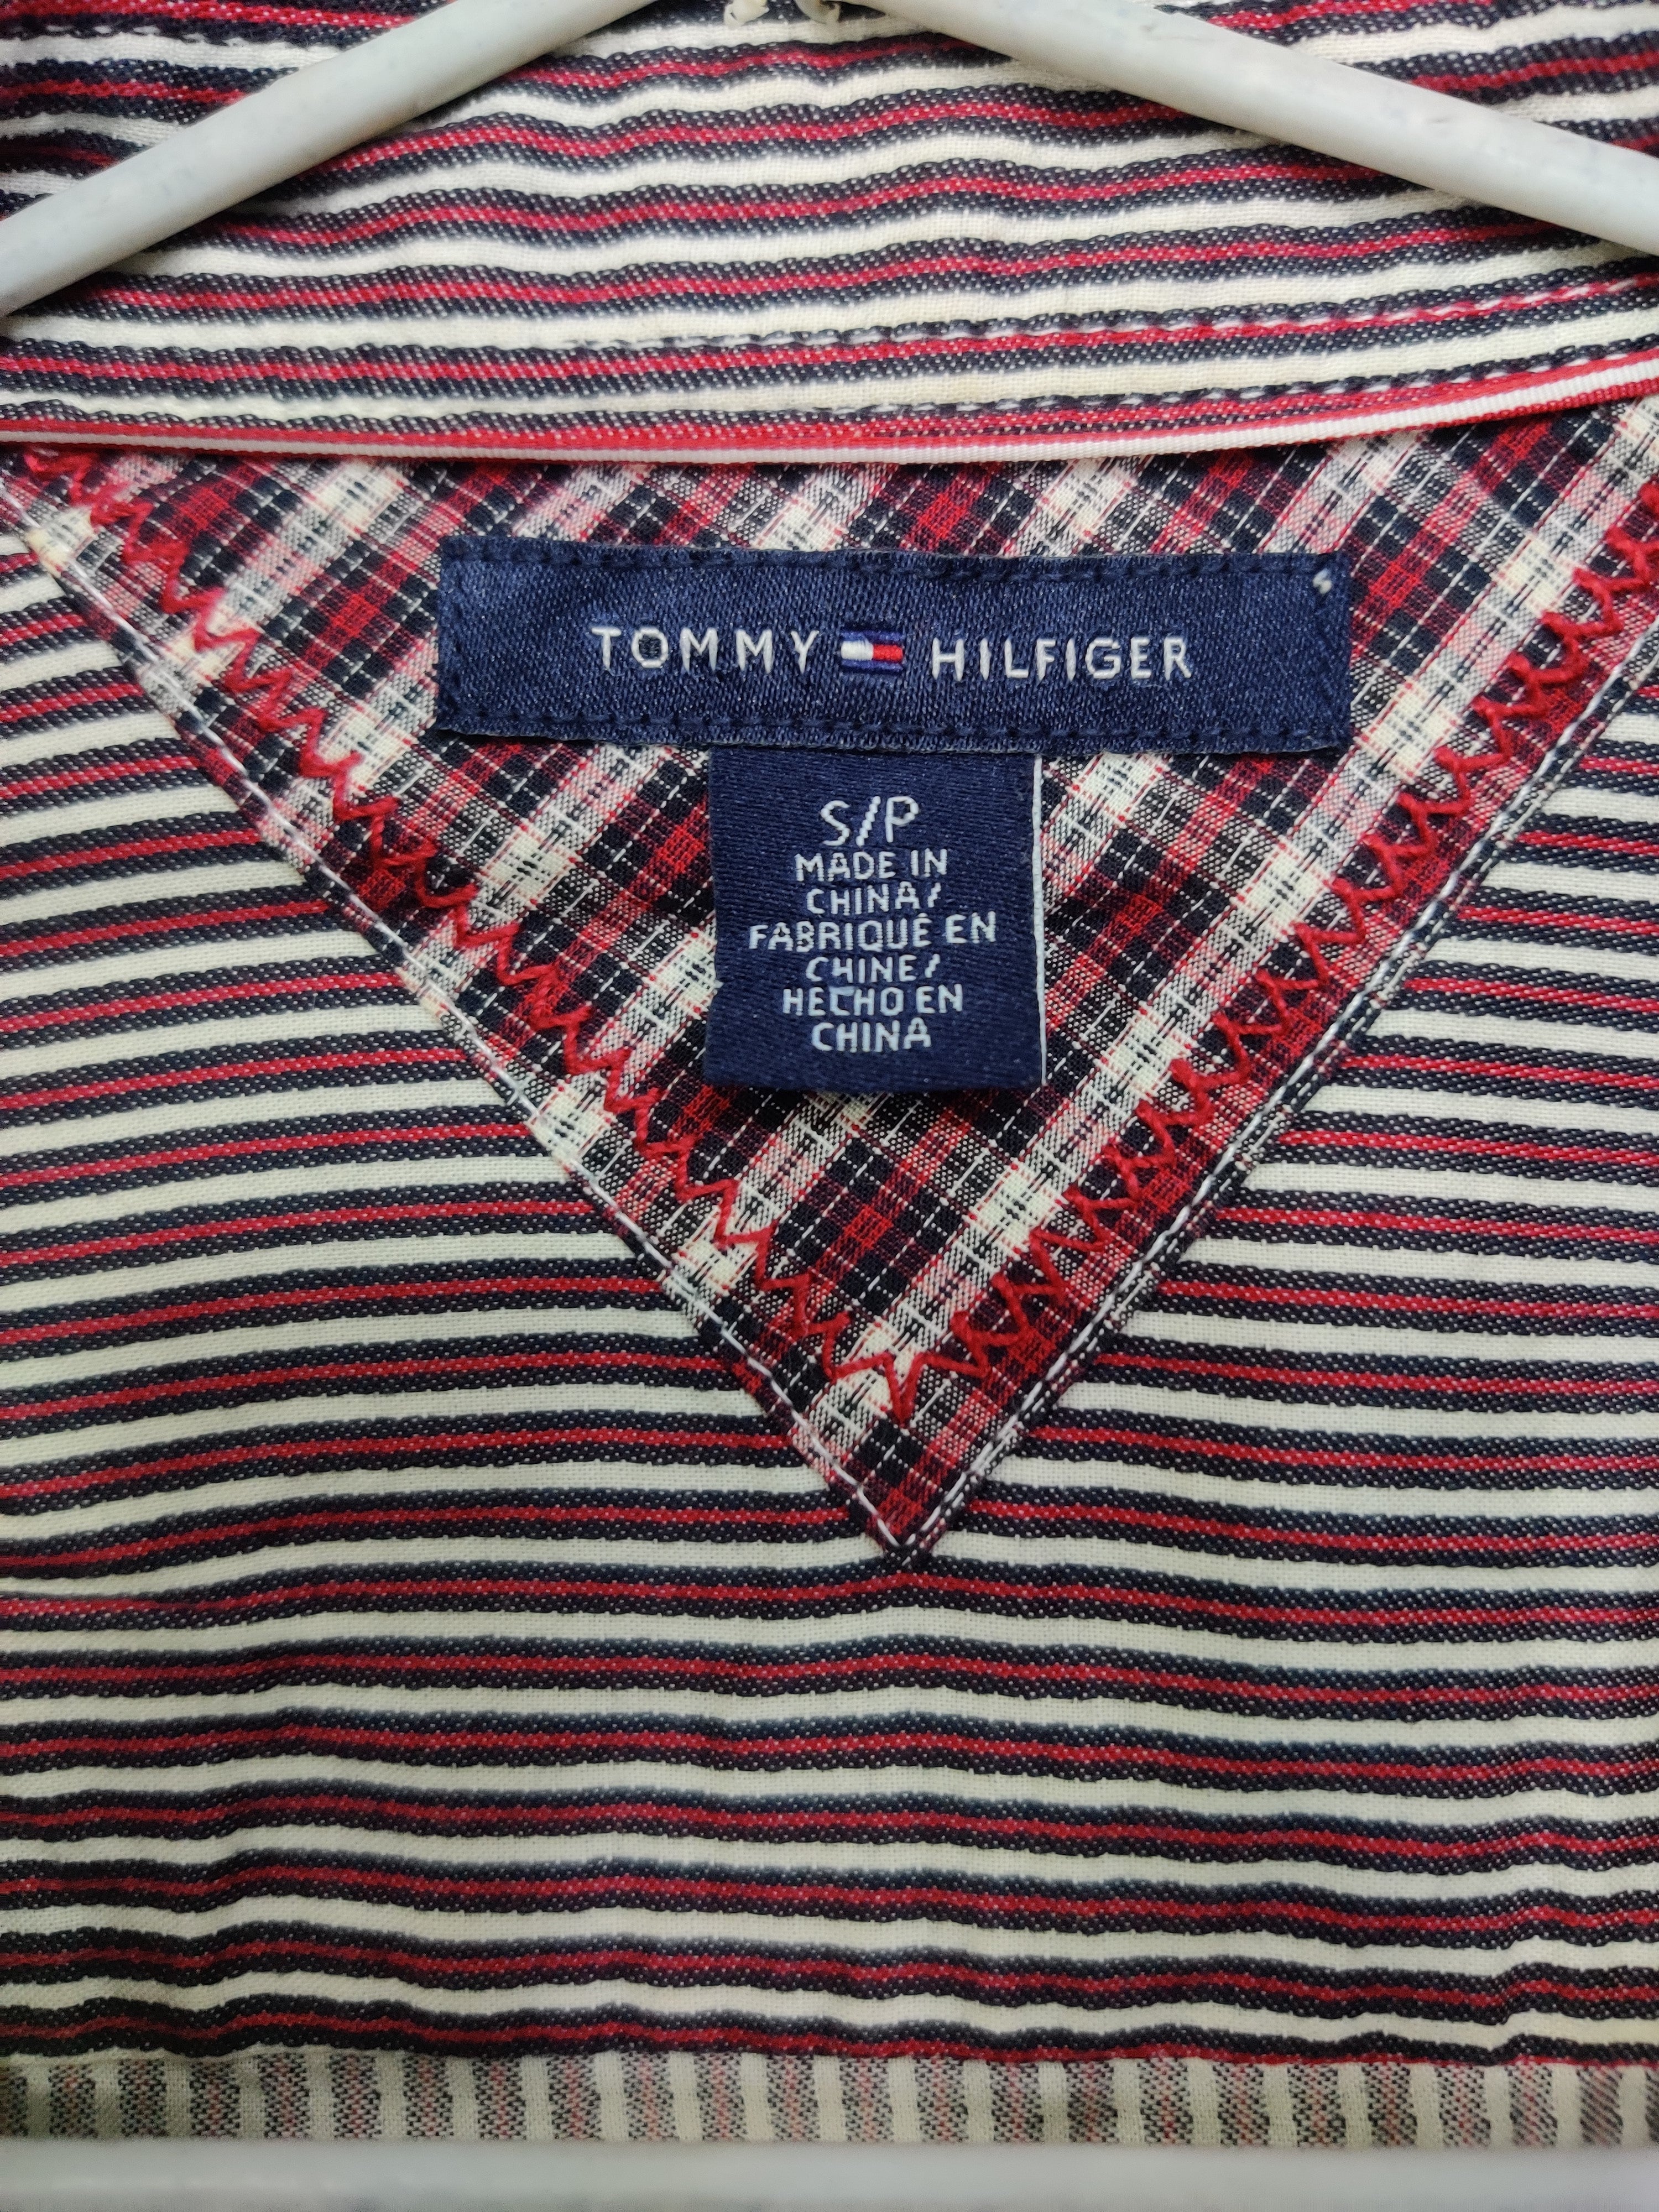 Tommy Hilfiger Branded Original Cotton For Women Tops